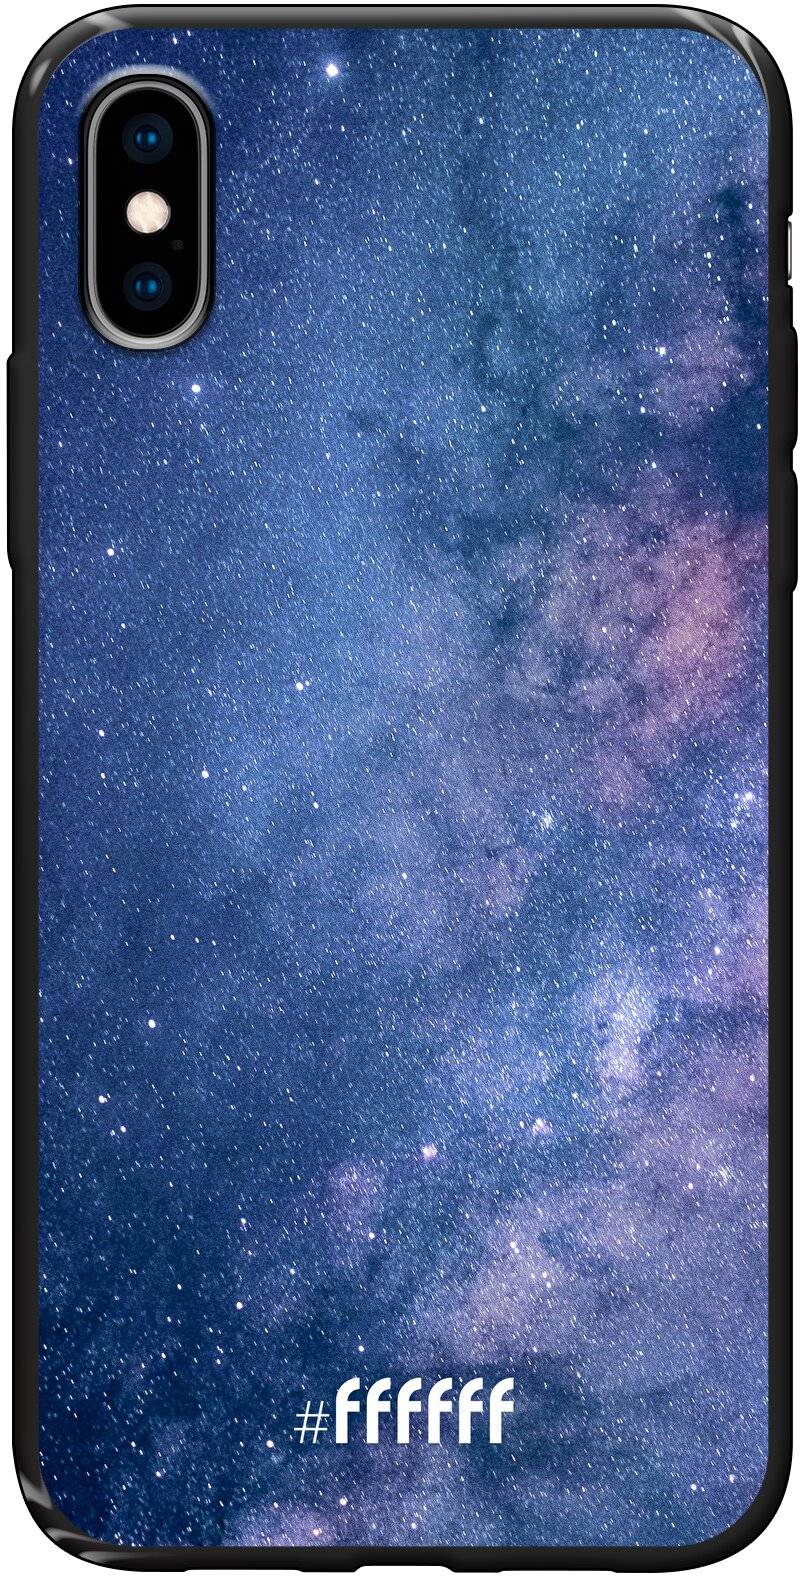 Perfect Stars iPhone X